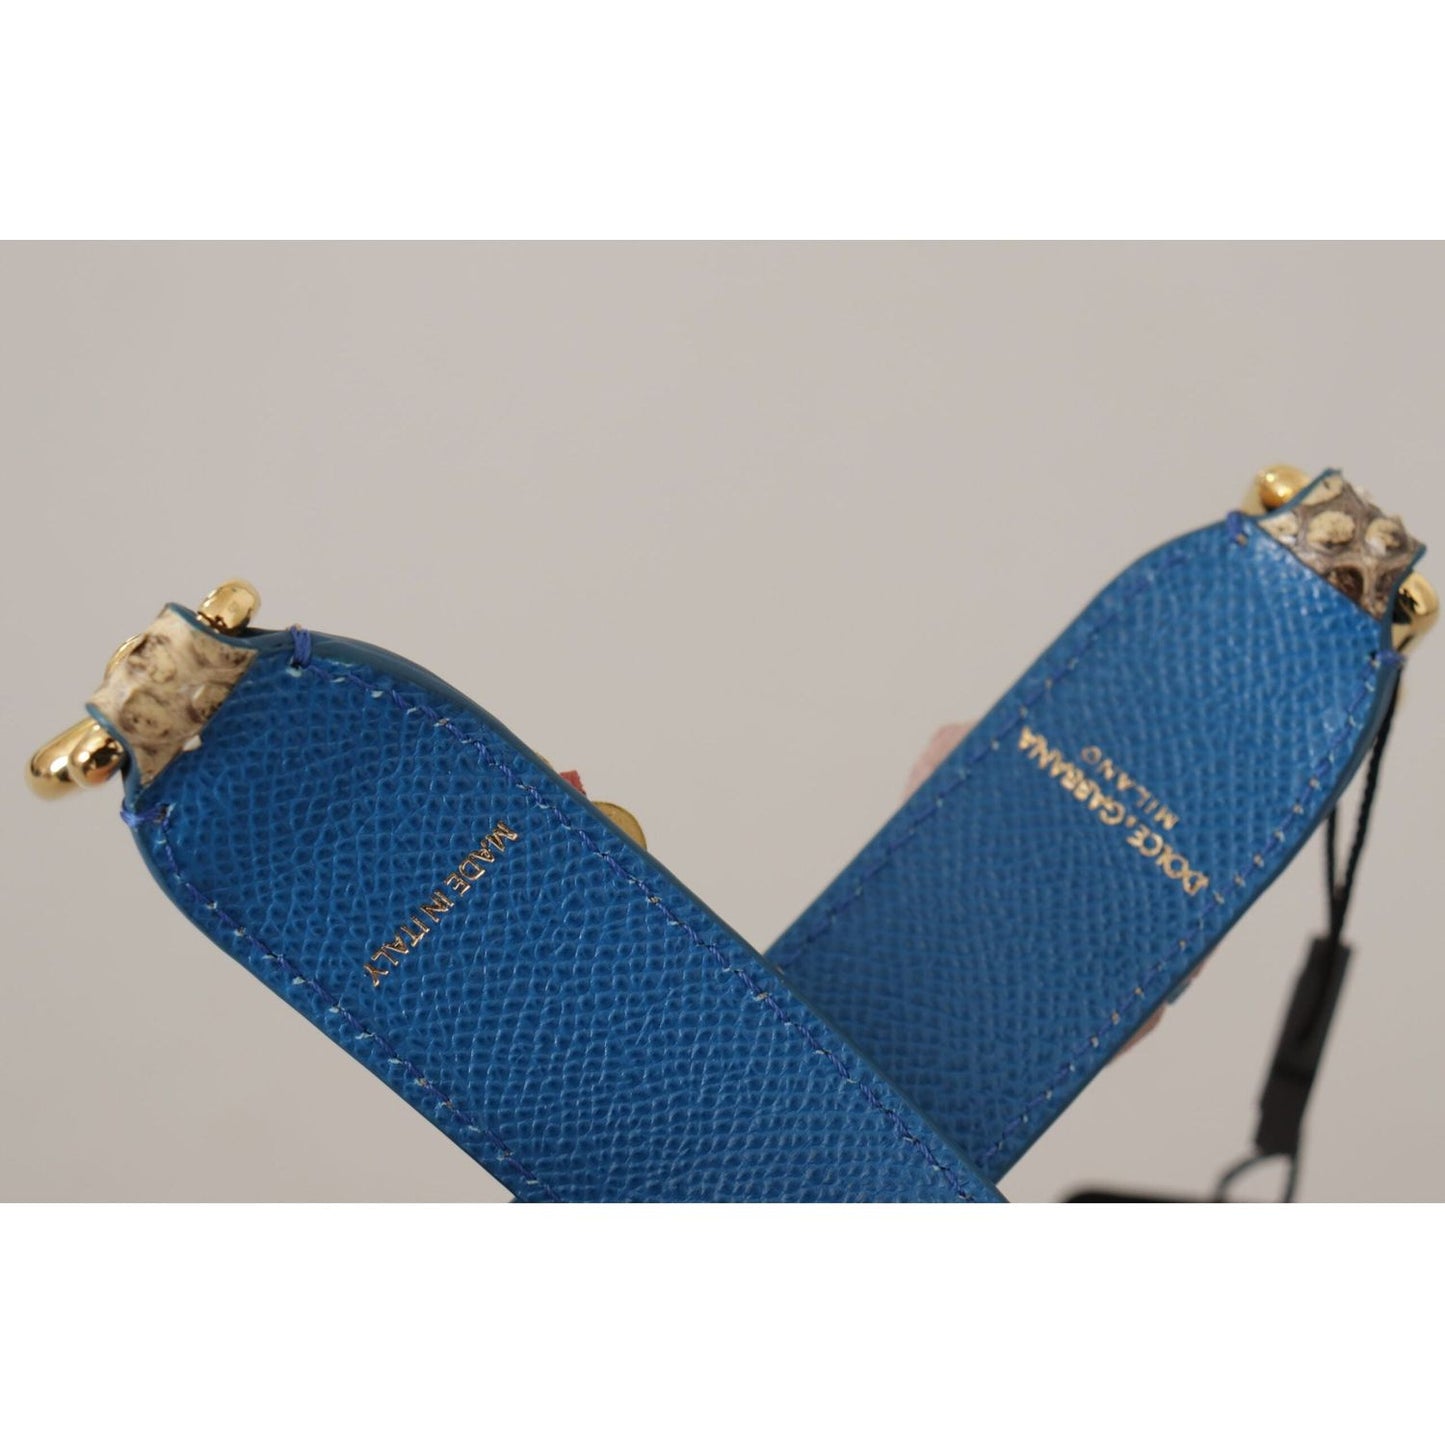 Dolce & Gabbana Elegant Beige Python Leather Strap beige-python-leather-floral-studded-shoulder-strap IMG_9731-scaled-3c3cf88a-9e8.jpg